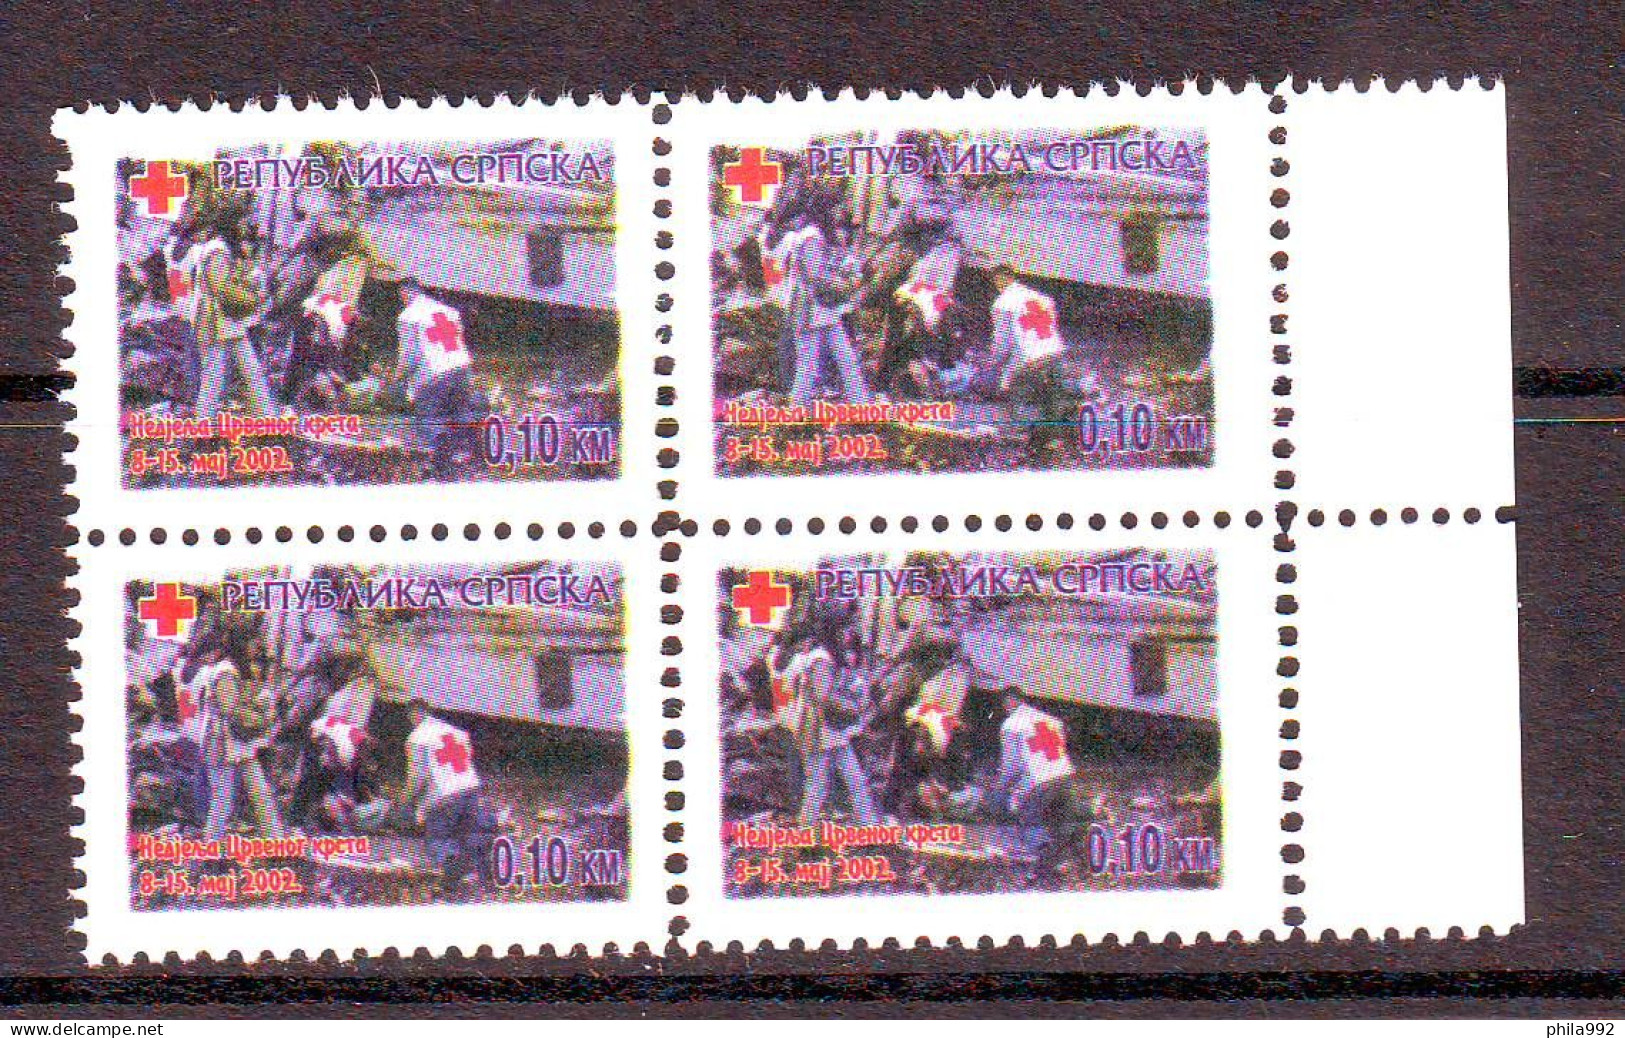 Bosnia:Republika Srpska 2002  Charity Stamp Red Cross  Mi.No.10 Self Adhesive Block Of 4 MNH - Bosnien-Herzegowina